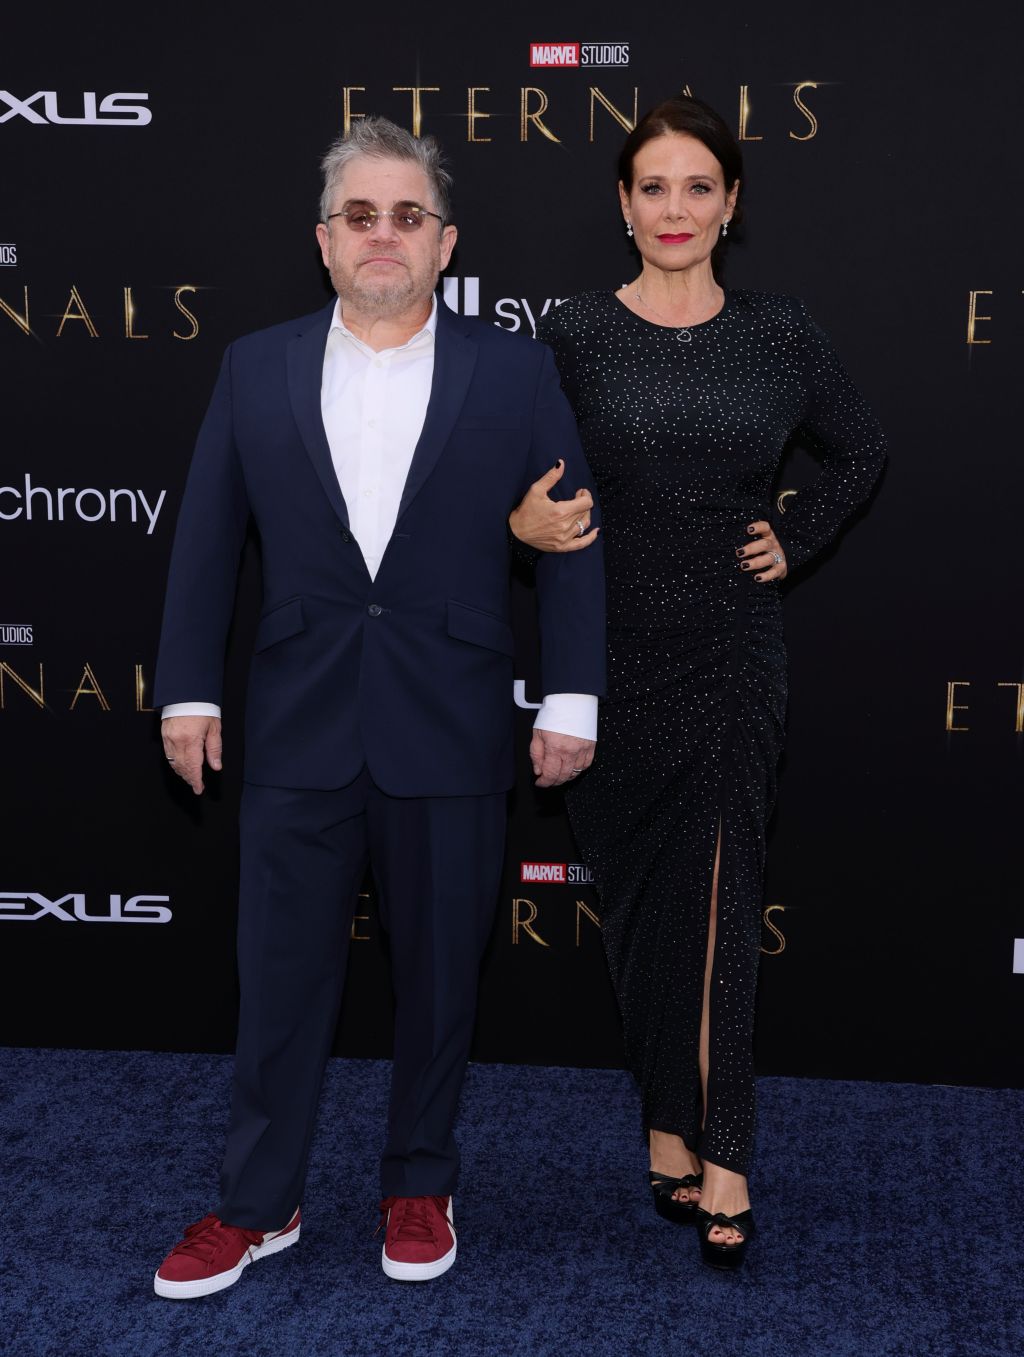 Photos: Angelina Jolie, Salma Hayek stun on 'Eternals' red carpet